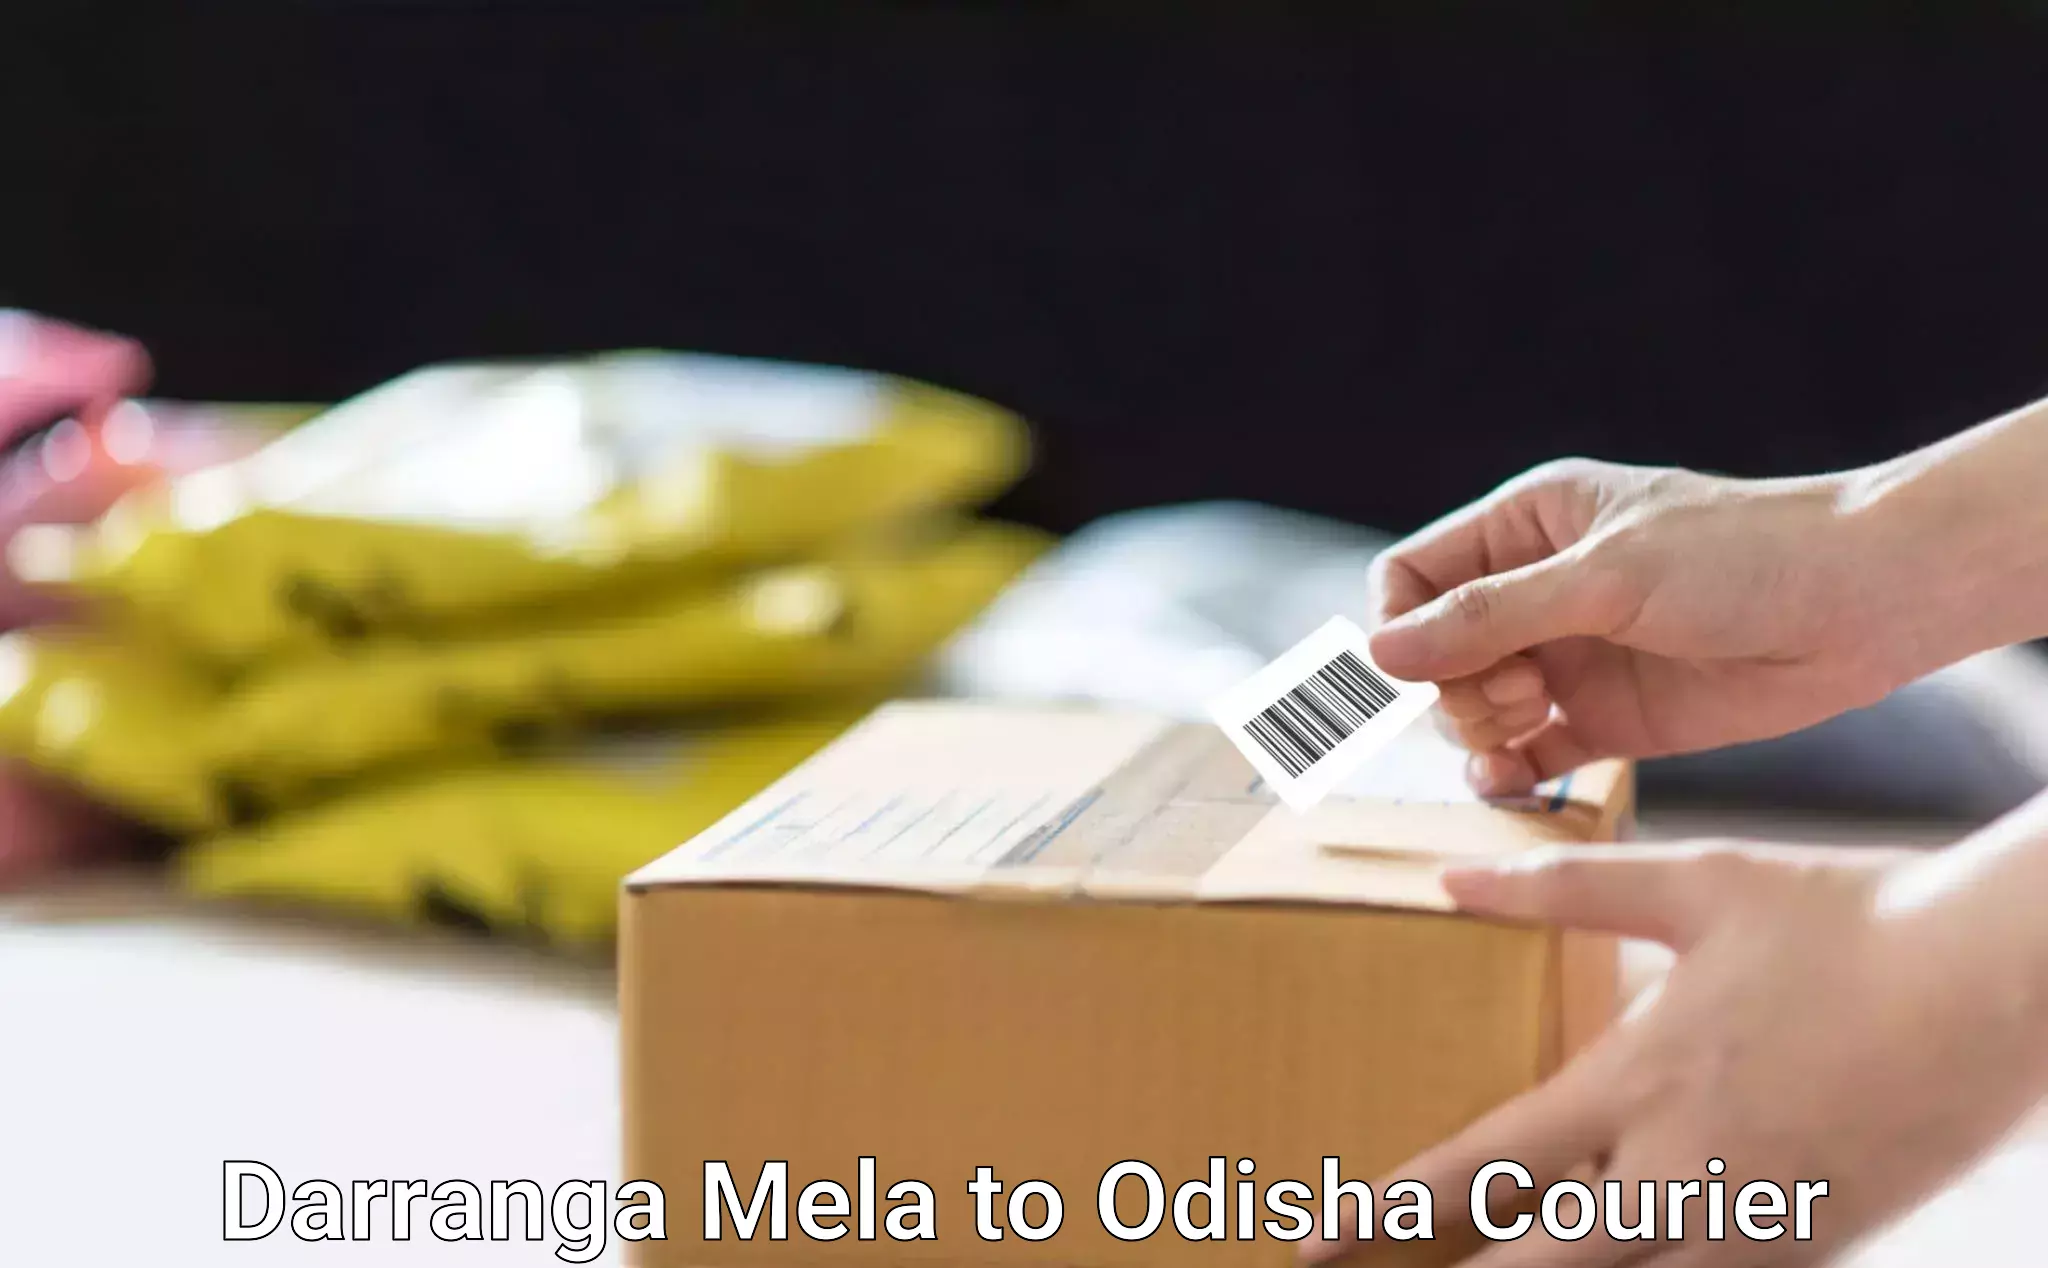 Large package courier Darranga Mela to Tihidi